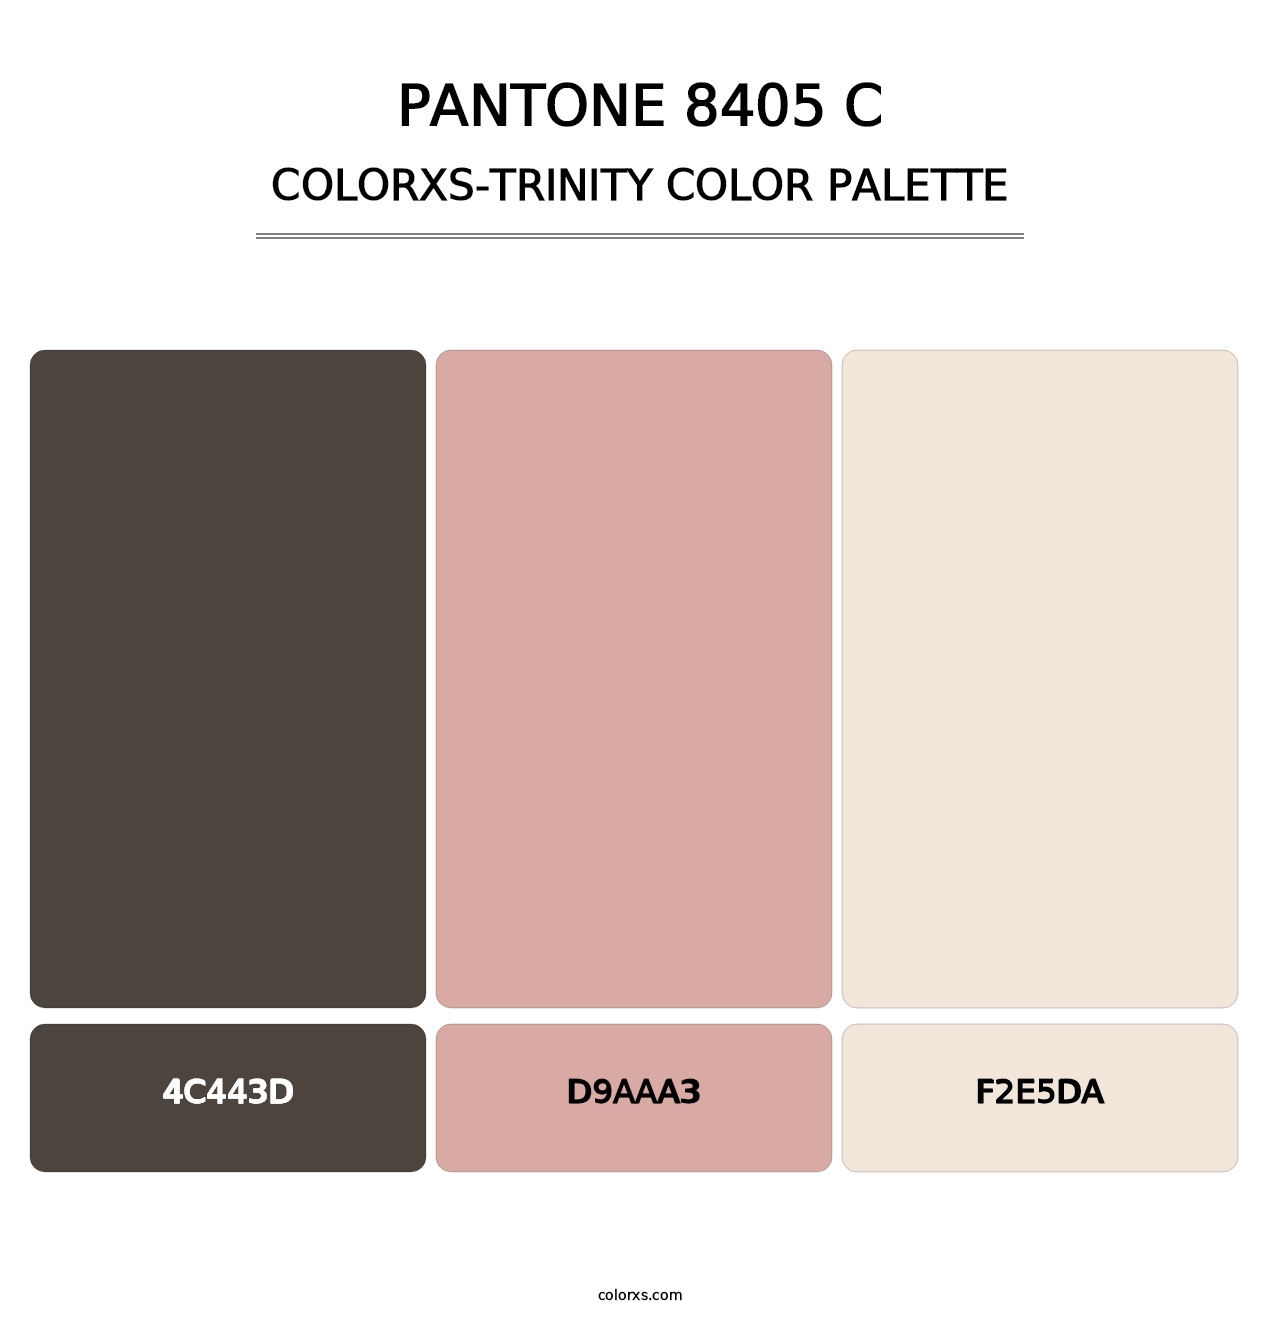 PANTONE 8405 C - Colorxs Trinity Palette